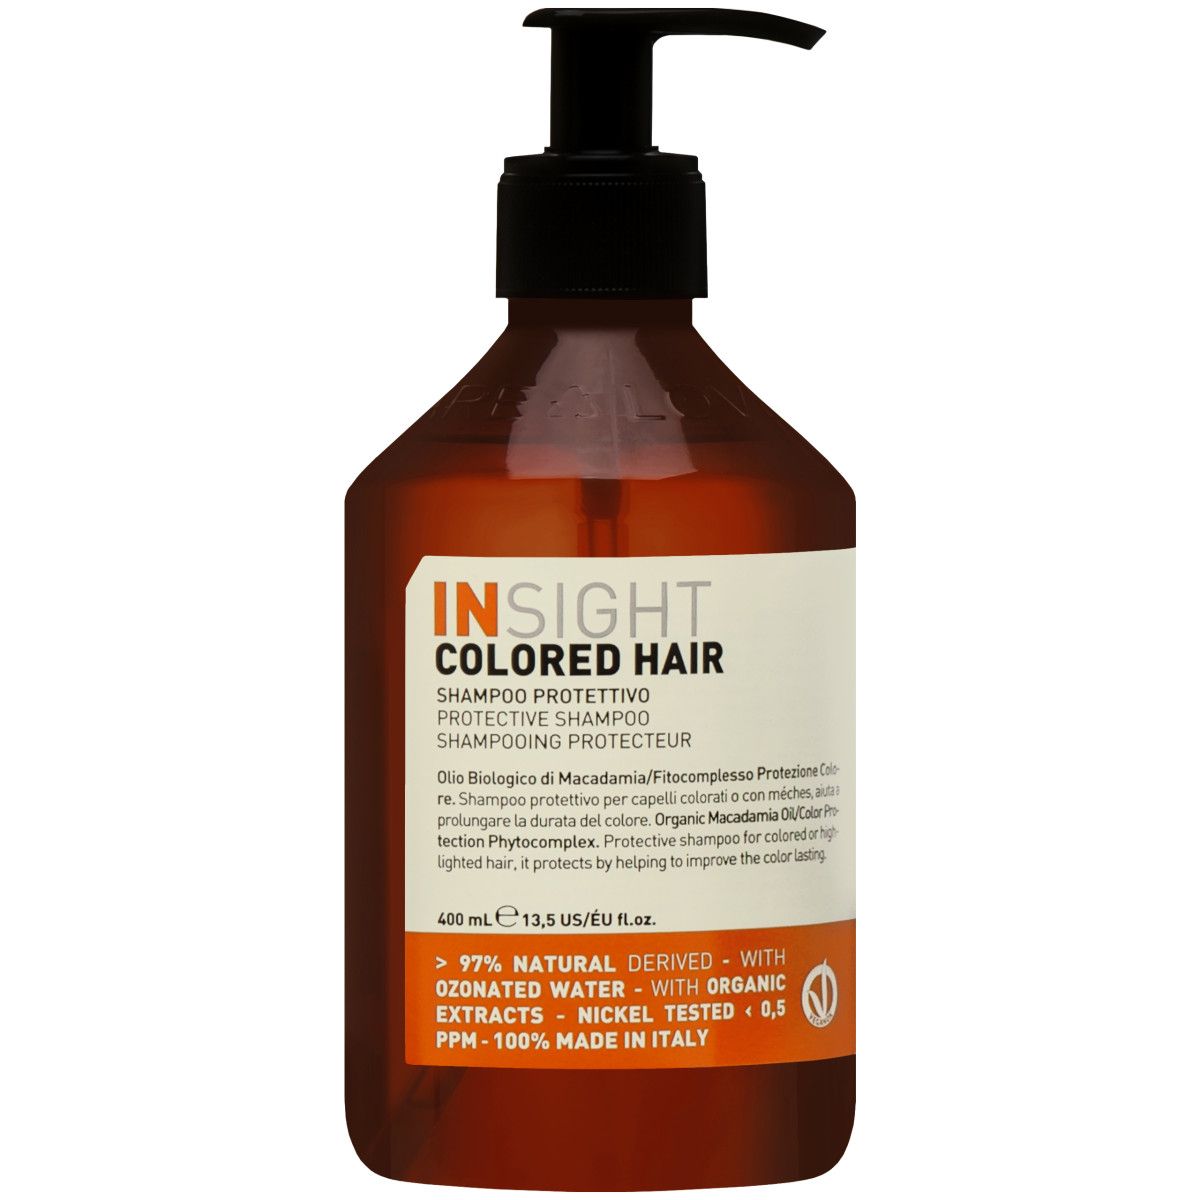 Insight Colored Hair Shampoo - szampon do włosów farbowanych, 400ml